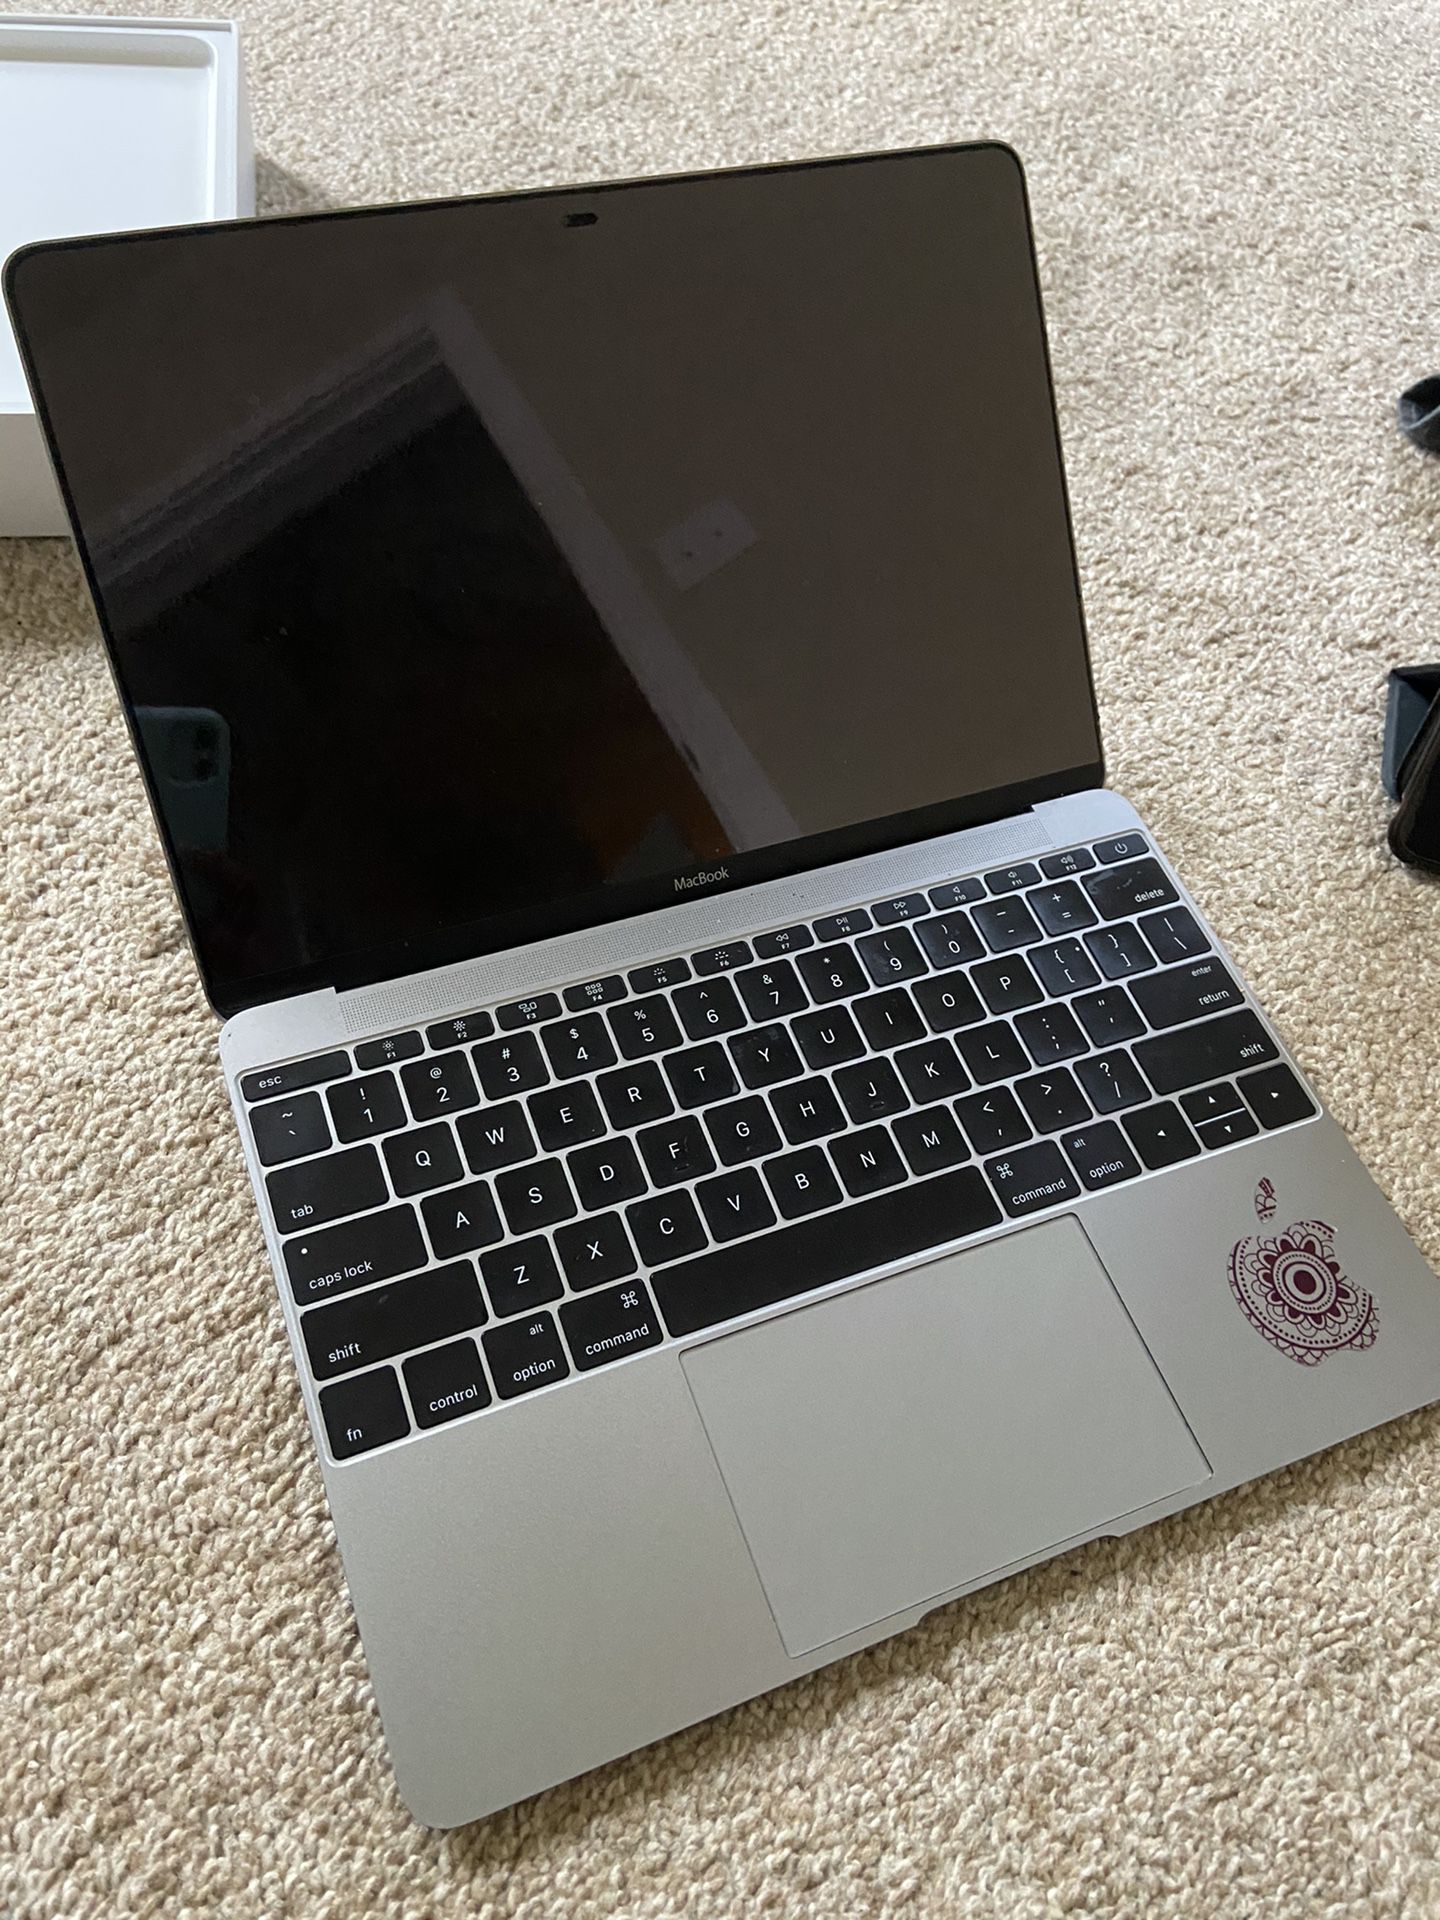 MacBook Air 12 inch with Retina Display